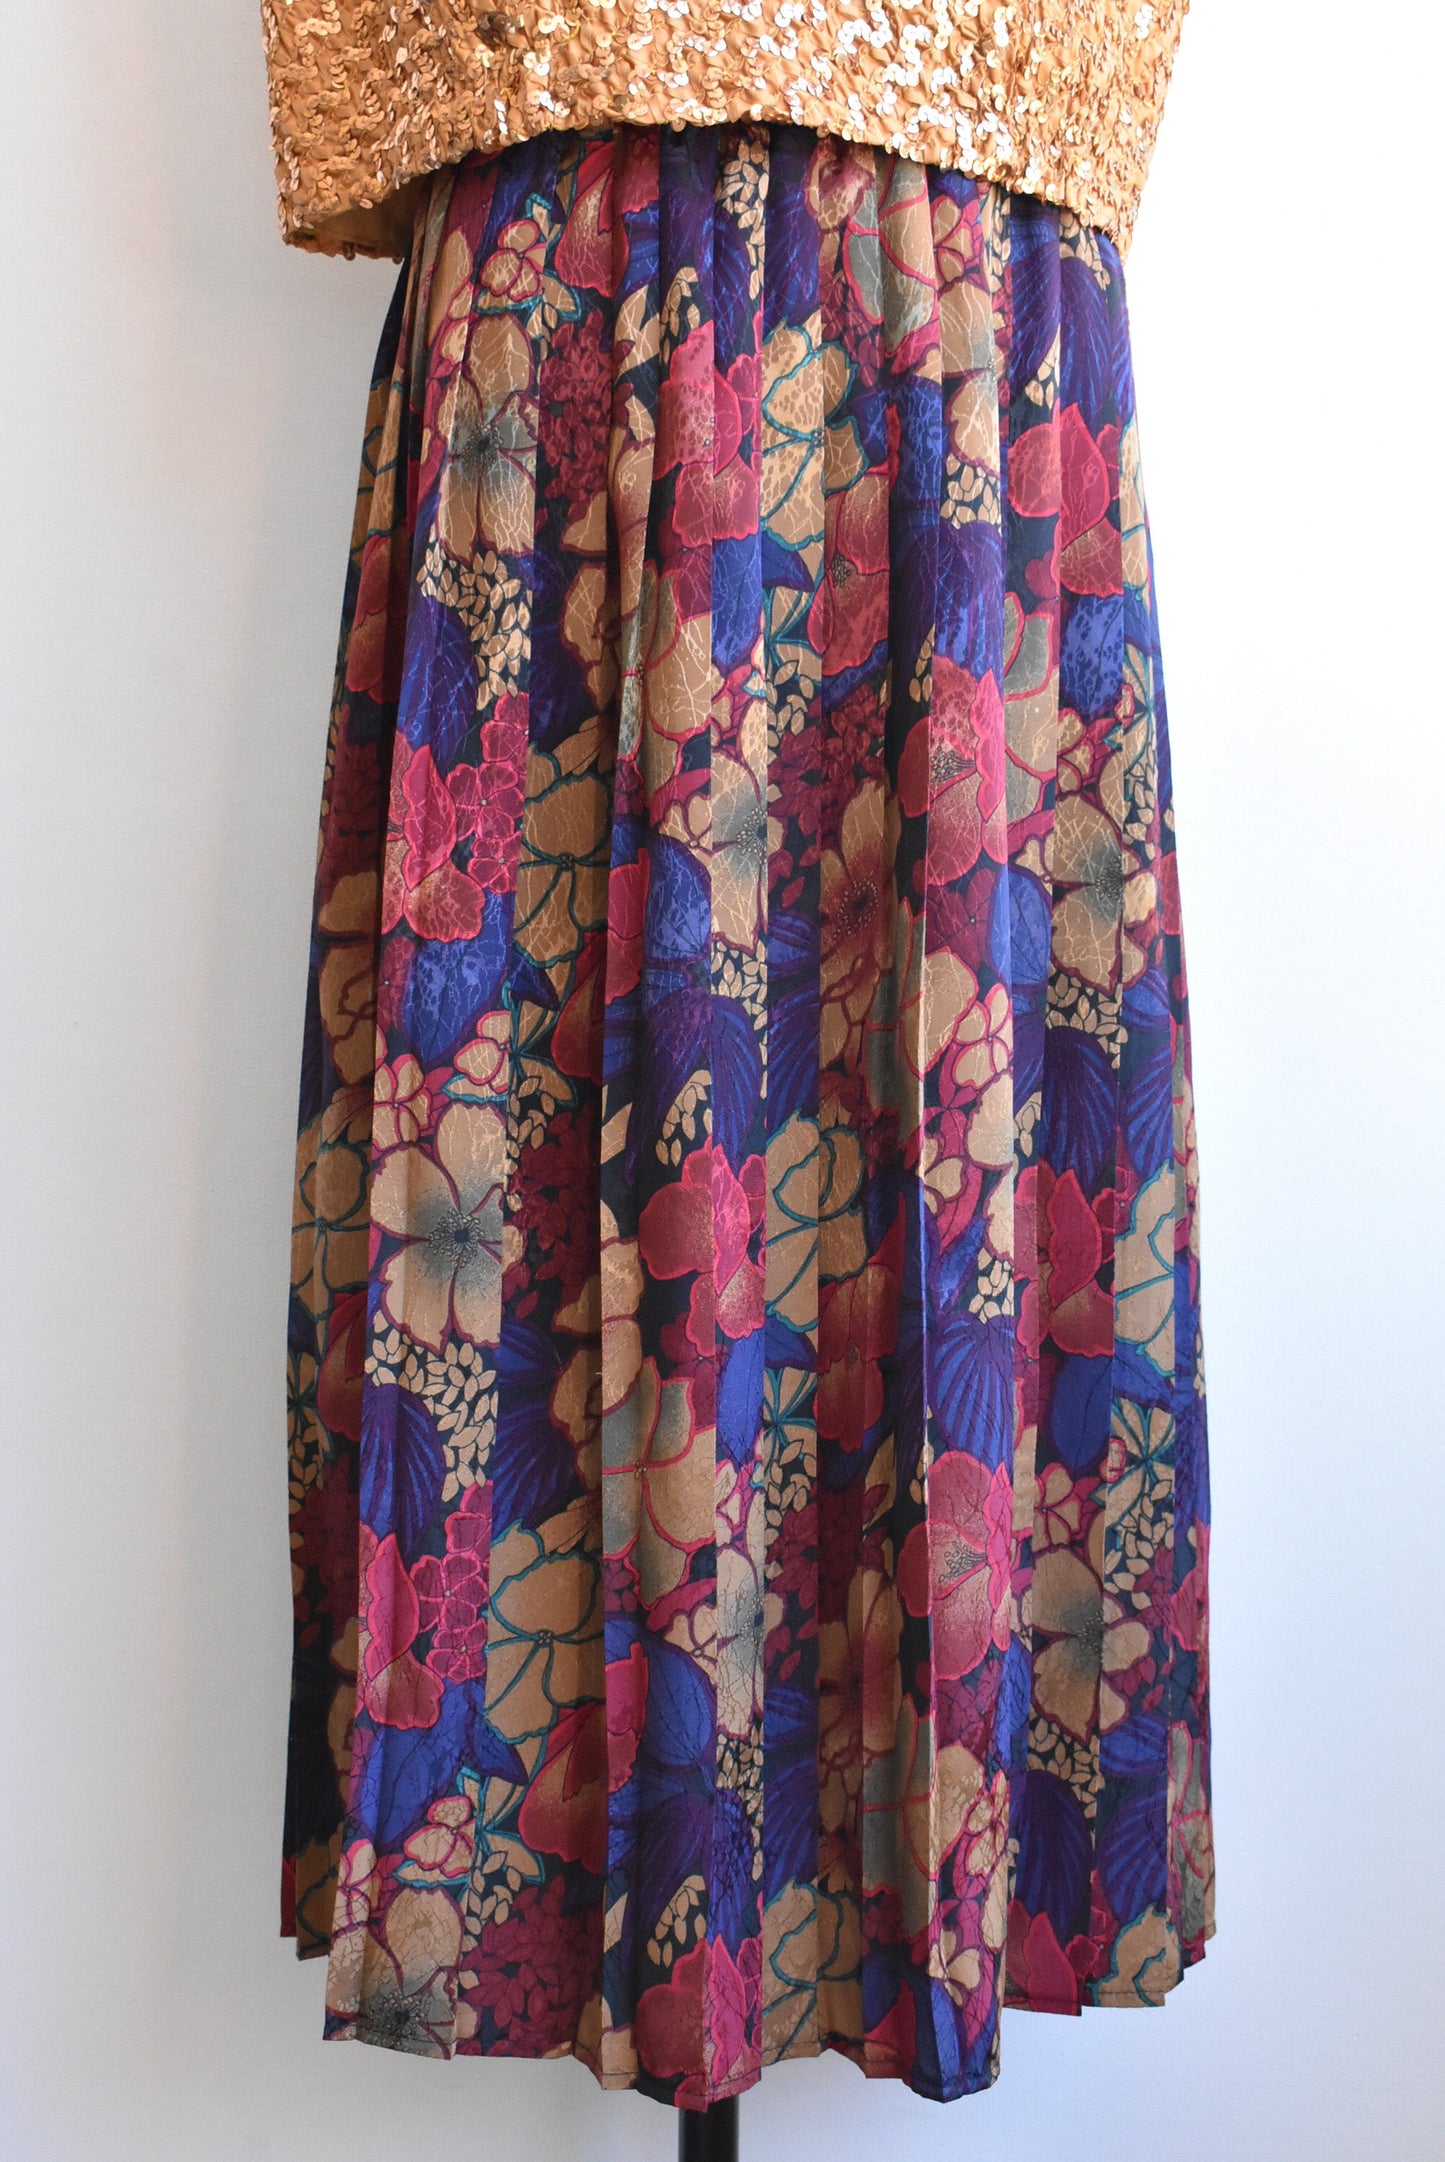 Bonds retro pleated floral skirt, size 20